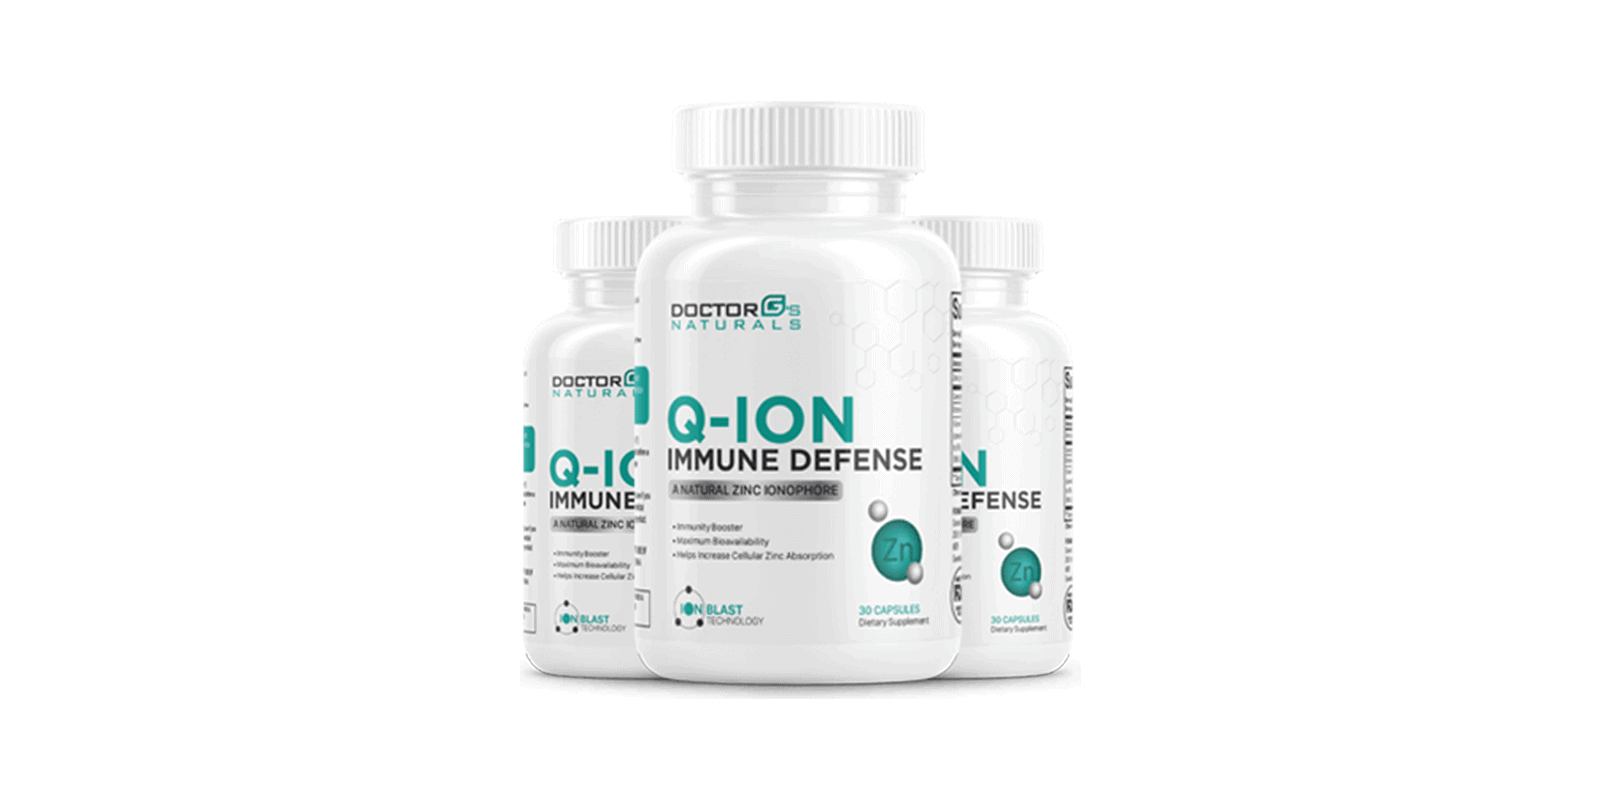 Q-ION Immune Defense reviews